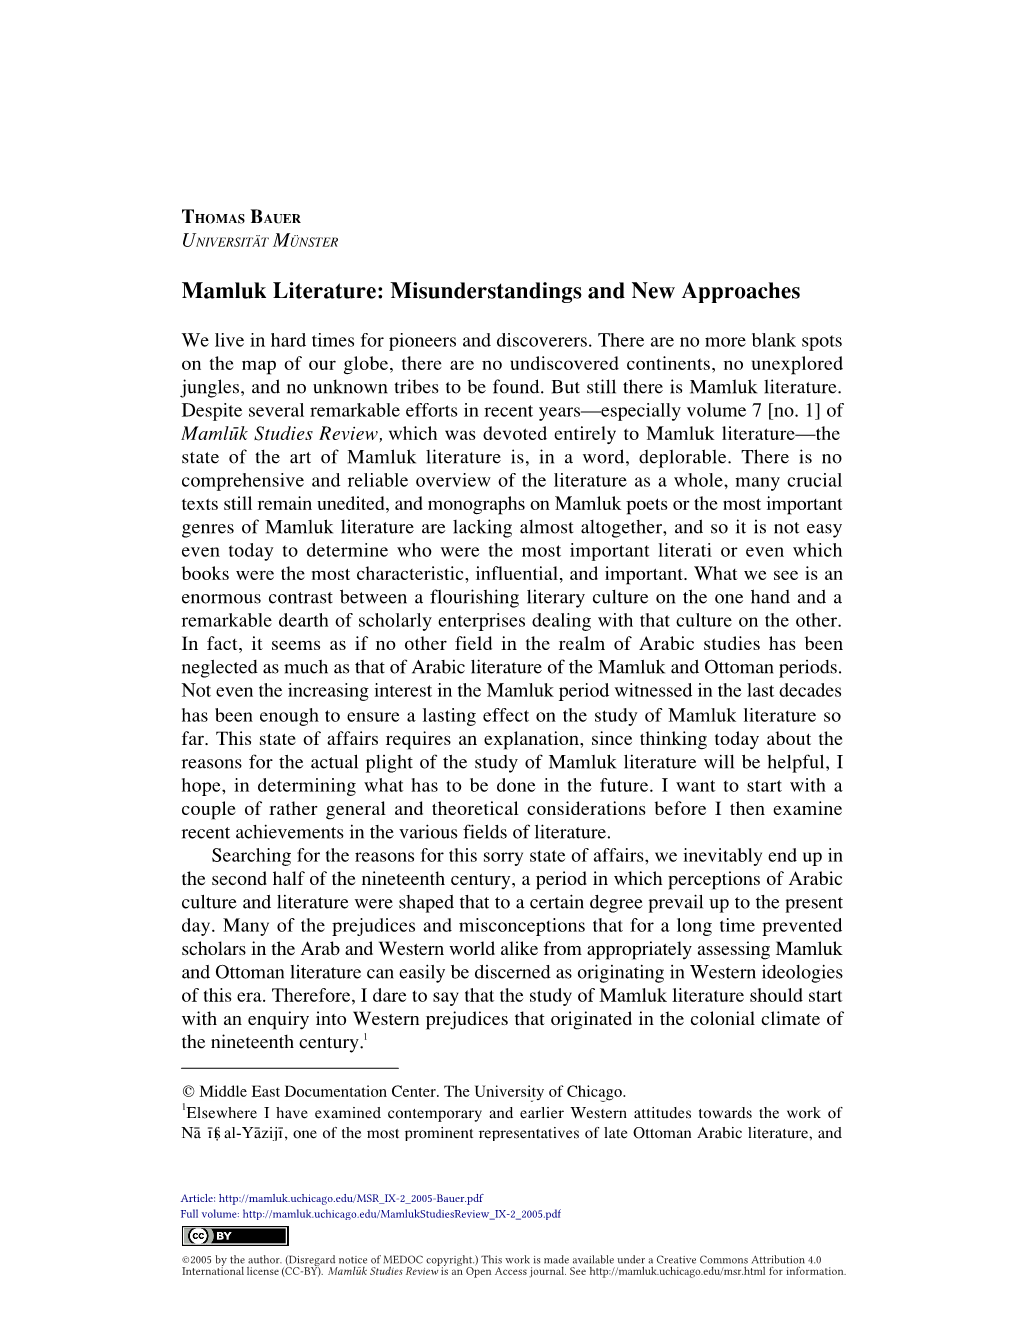 Mamluk Literature: Misunderstandings and New Approaches (MSR